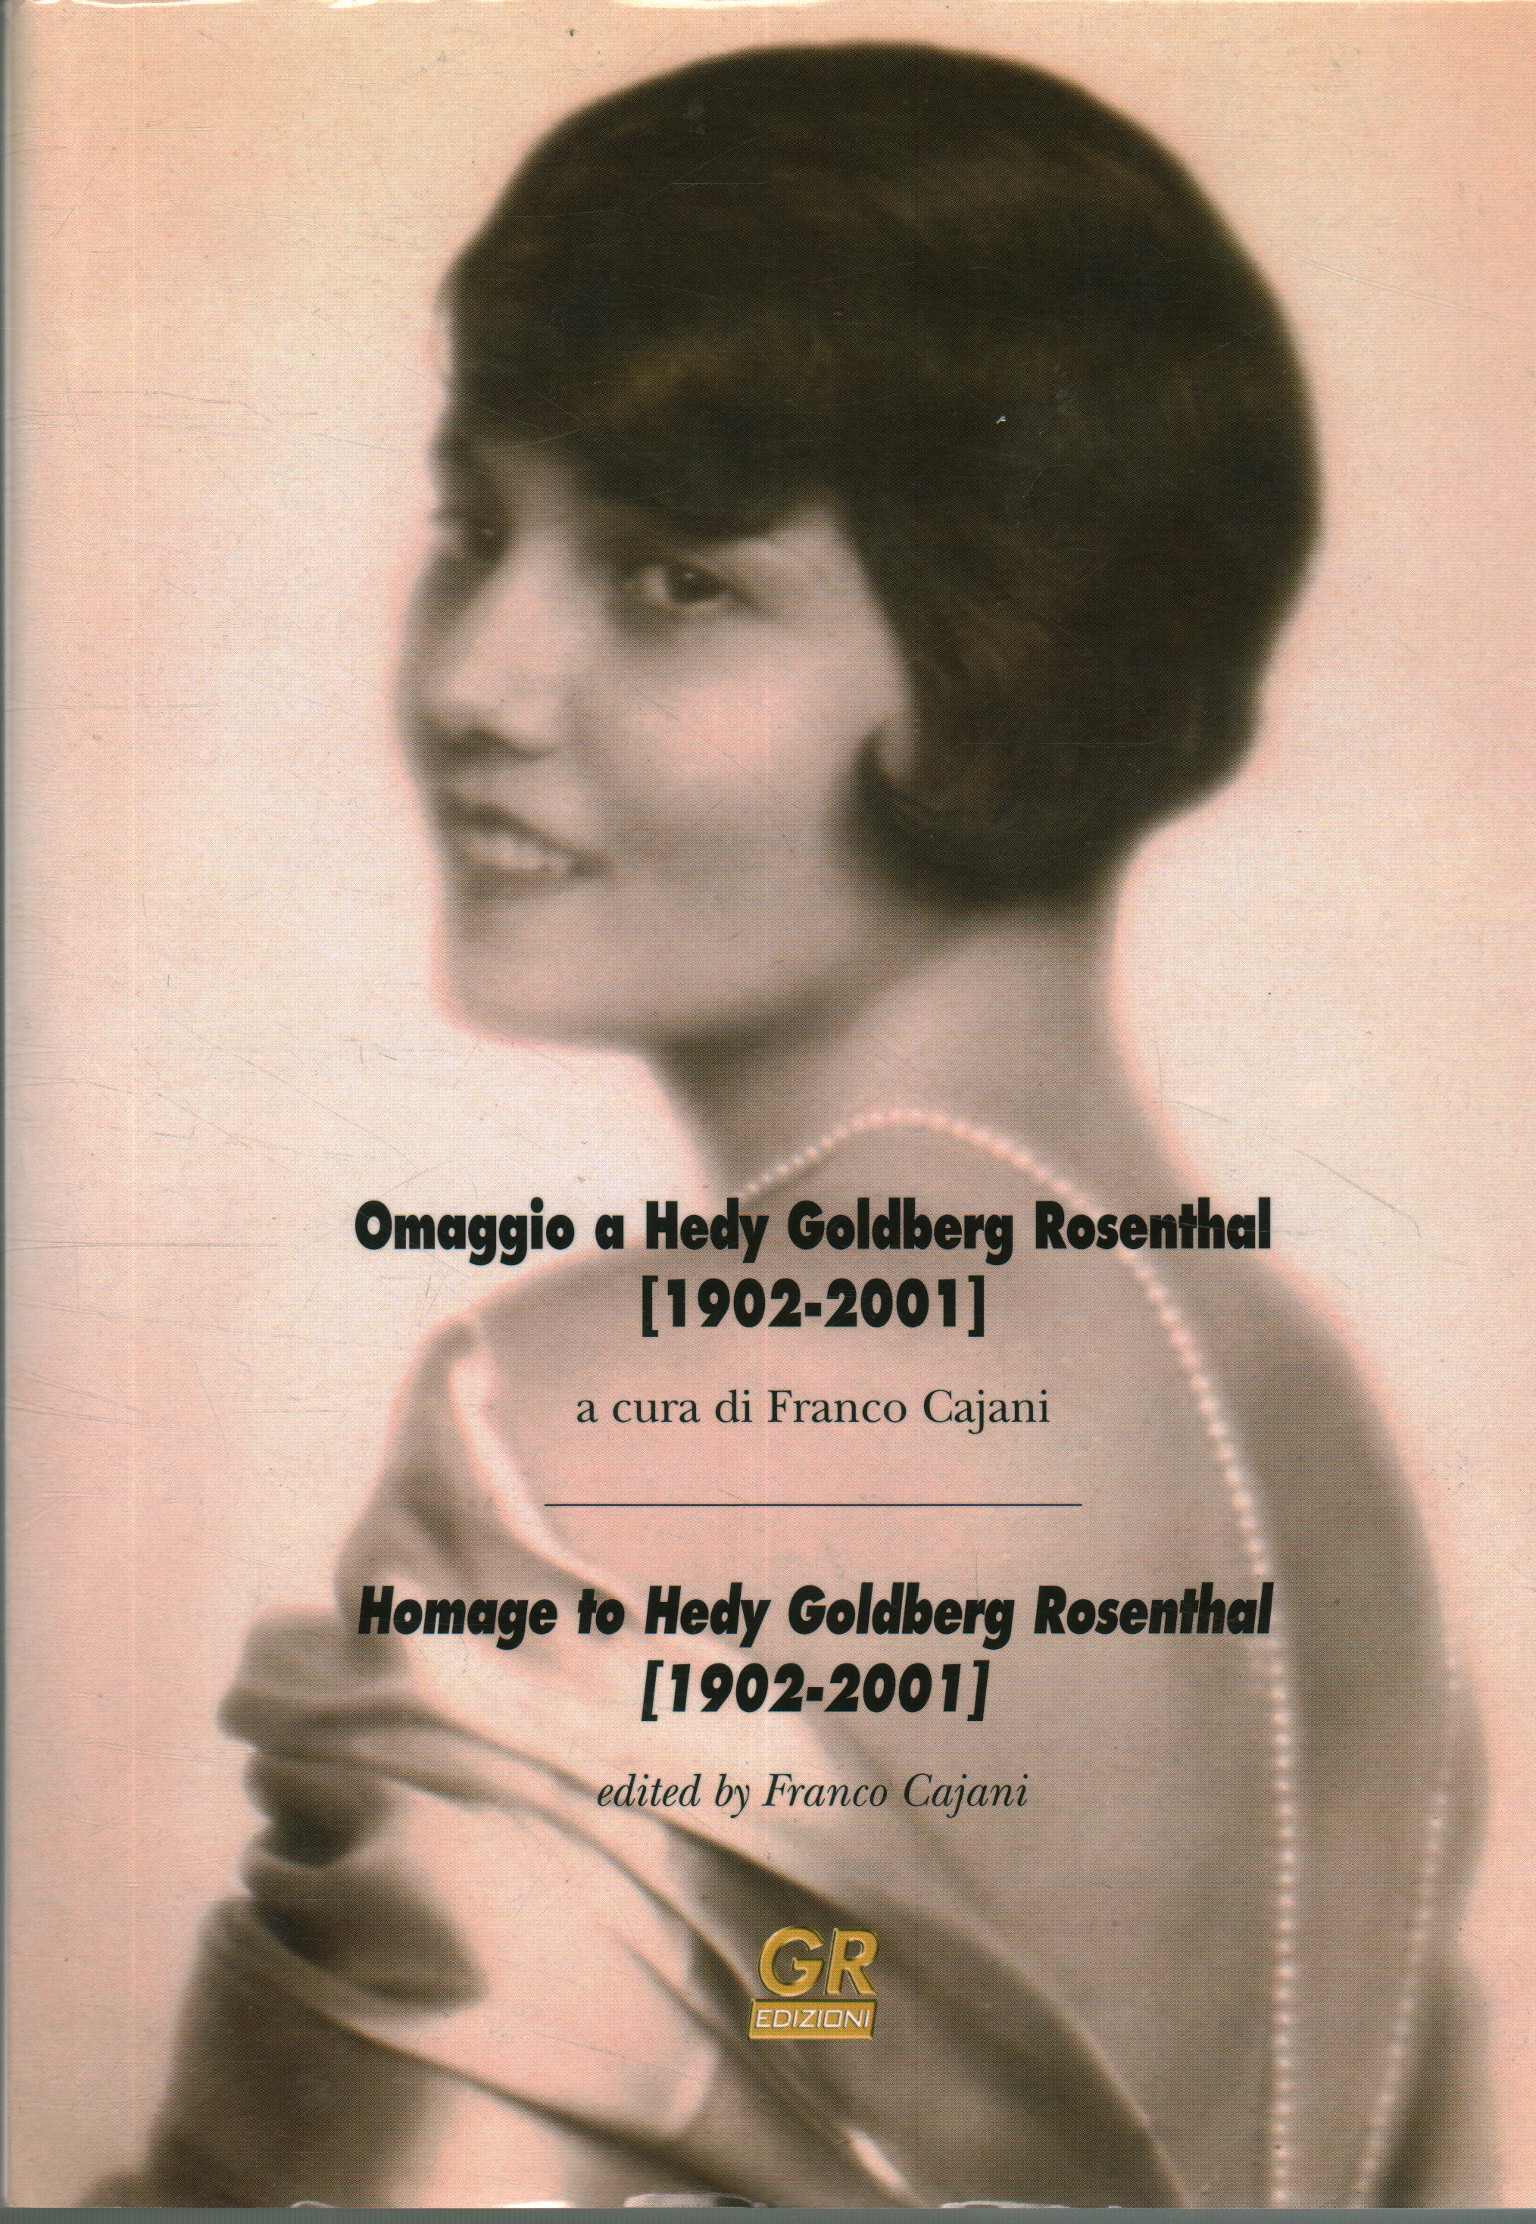 Homenaje a Hedy Goldberg Rosenthal (1902-2001), Franco Cajani